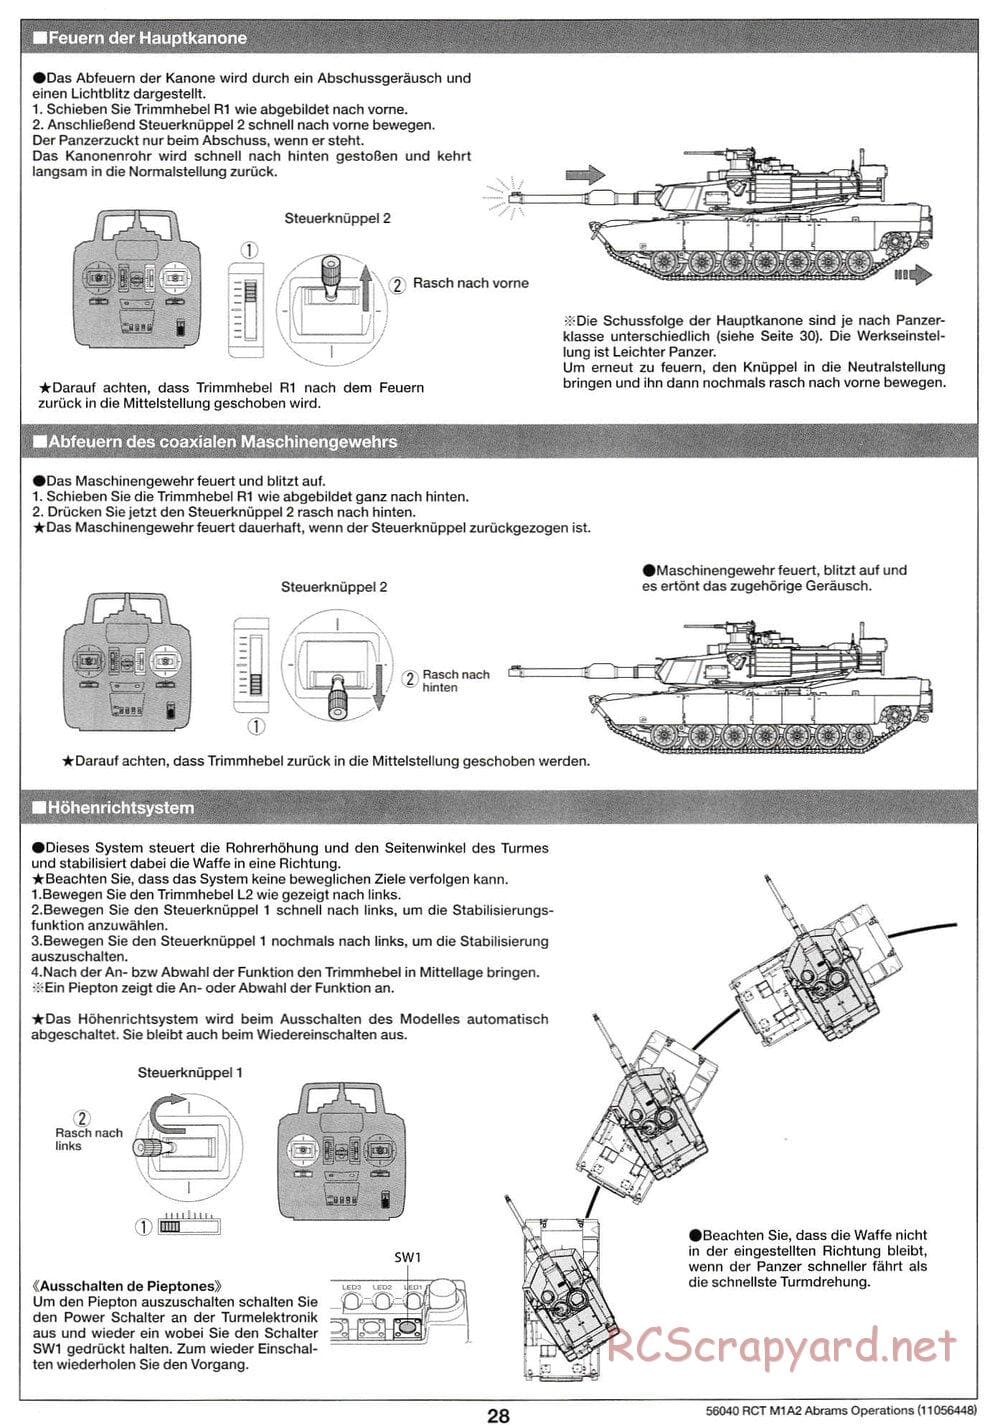 Tamiya - U.S. Main Battle Tank M1A2 Abrams - 1/16 Scale Chassis - Operation Manual - Page 6